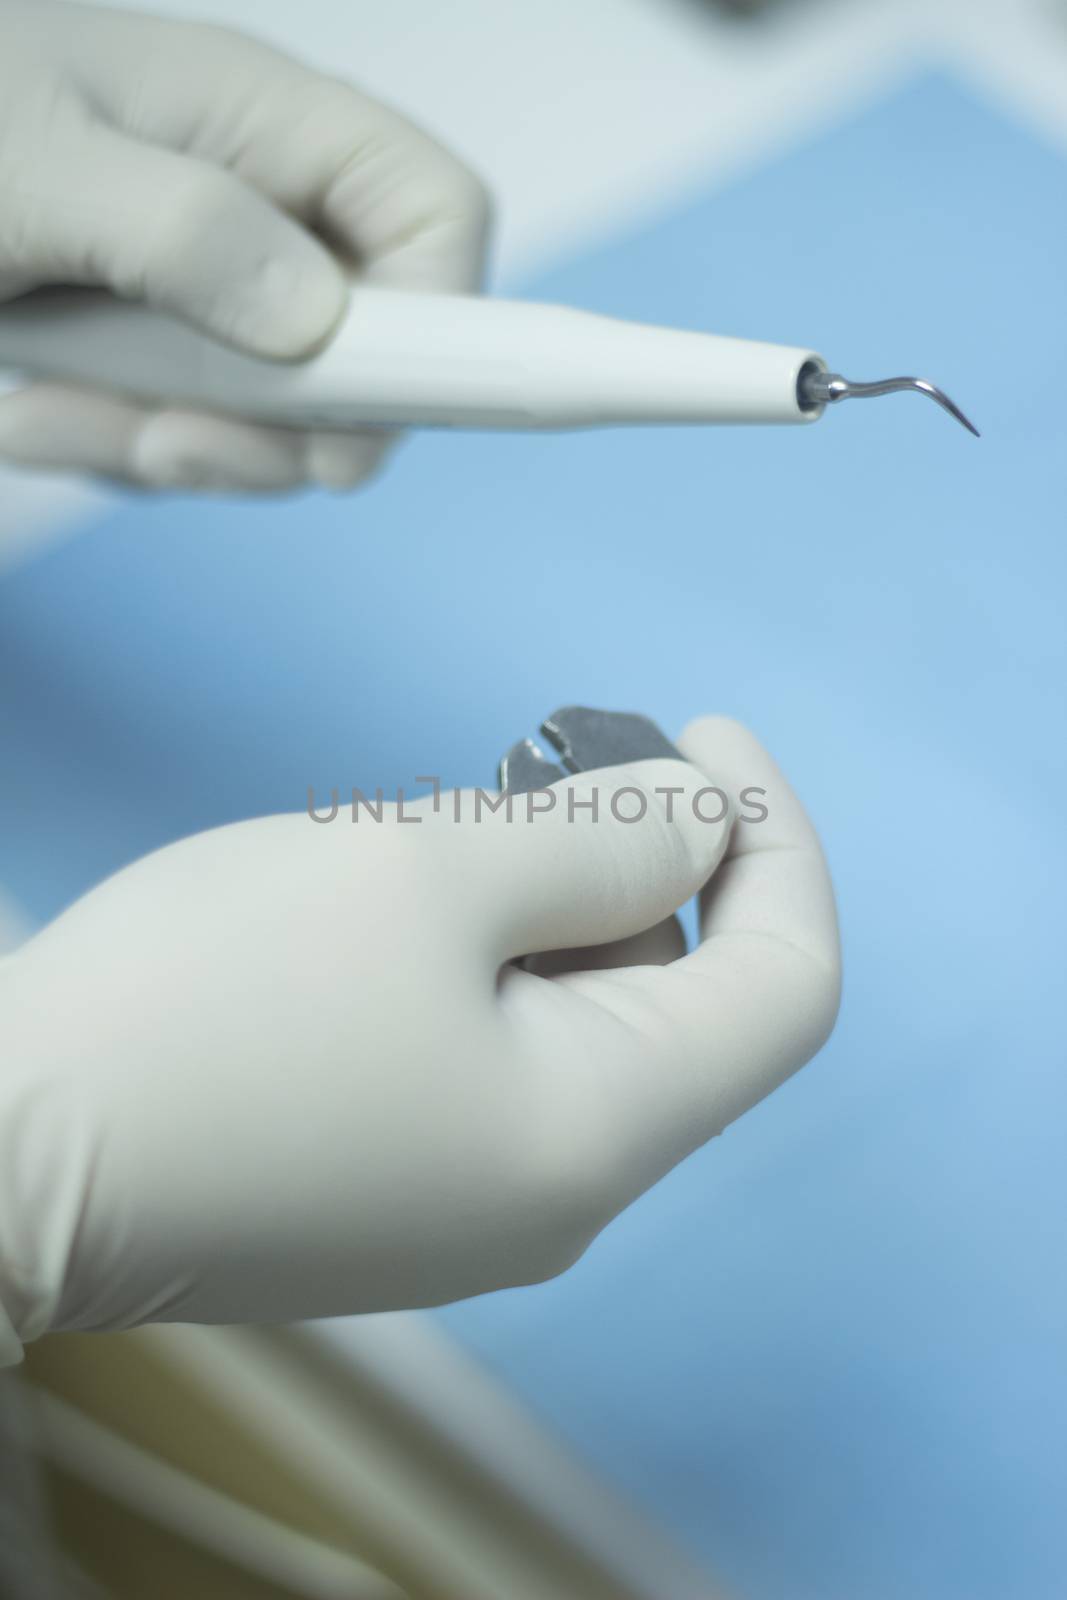 Dental nurse attaching ultrasound teeth cleaning attachment by edwardolive